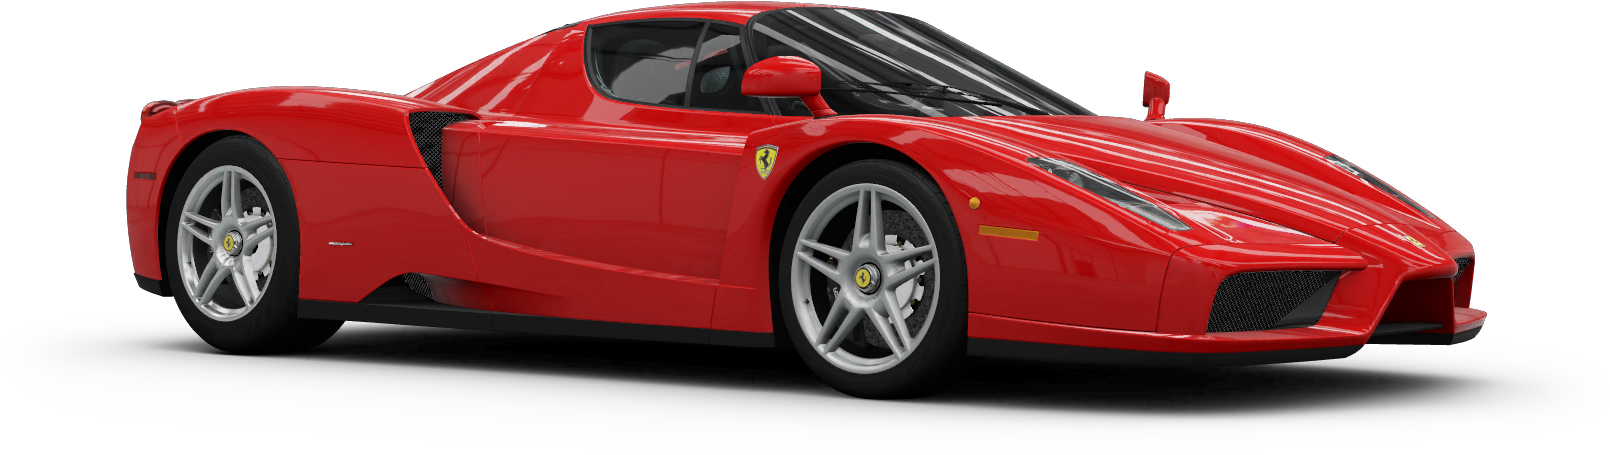 Red Ferrari Enzo Side View